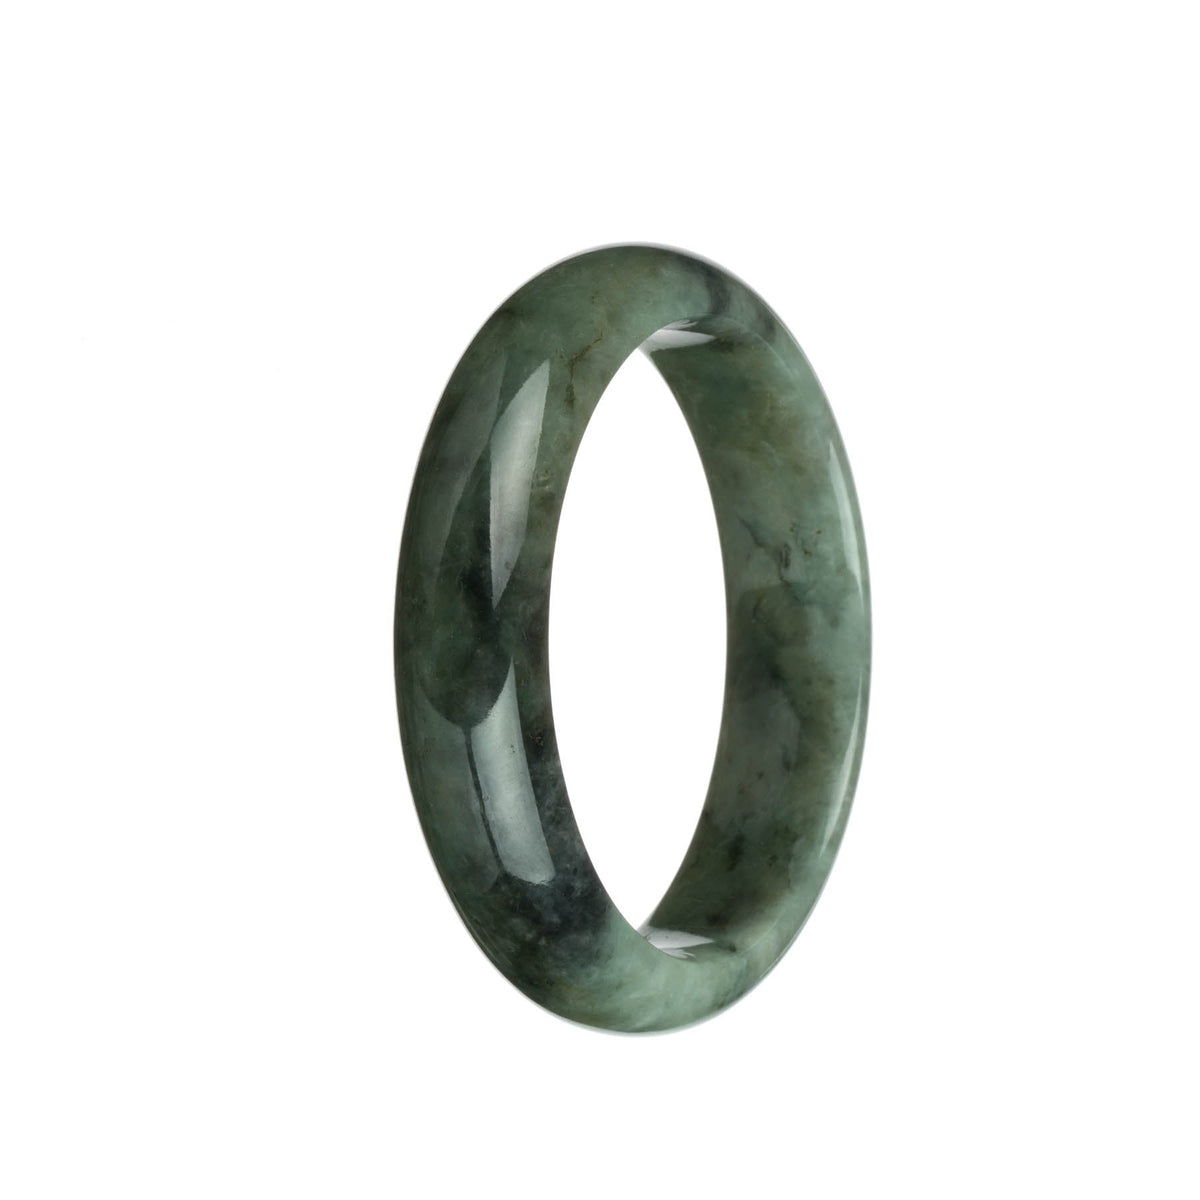 Certified Natural Green and Light Grey with Black Patterns Jadeite Bangle Bracelet - 60mm Half Moon